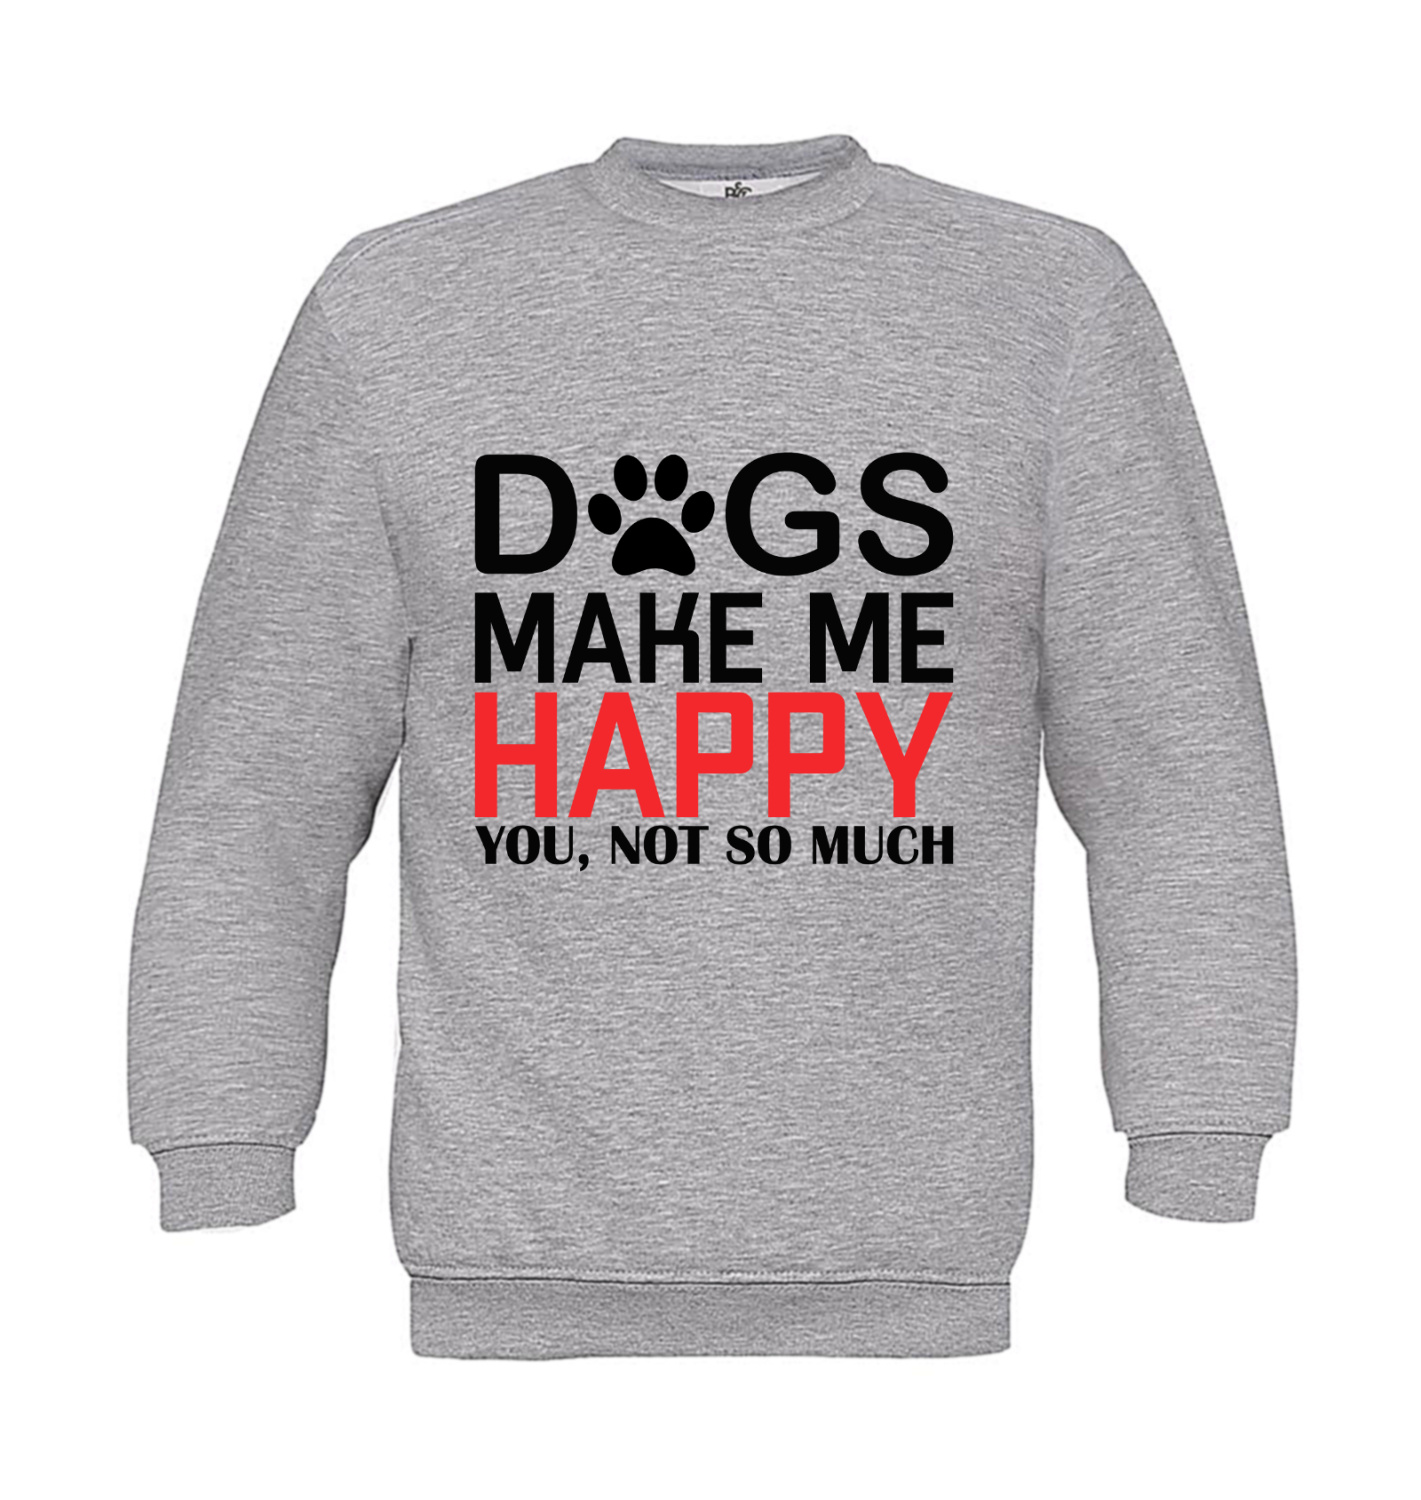 Sweatshirt Kinder Hunde - Dogs make me happy